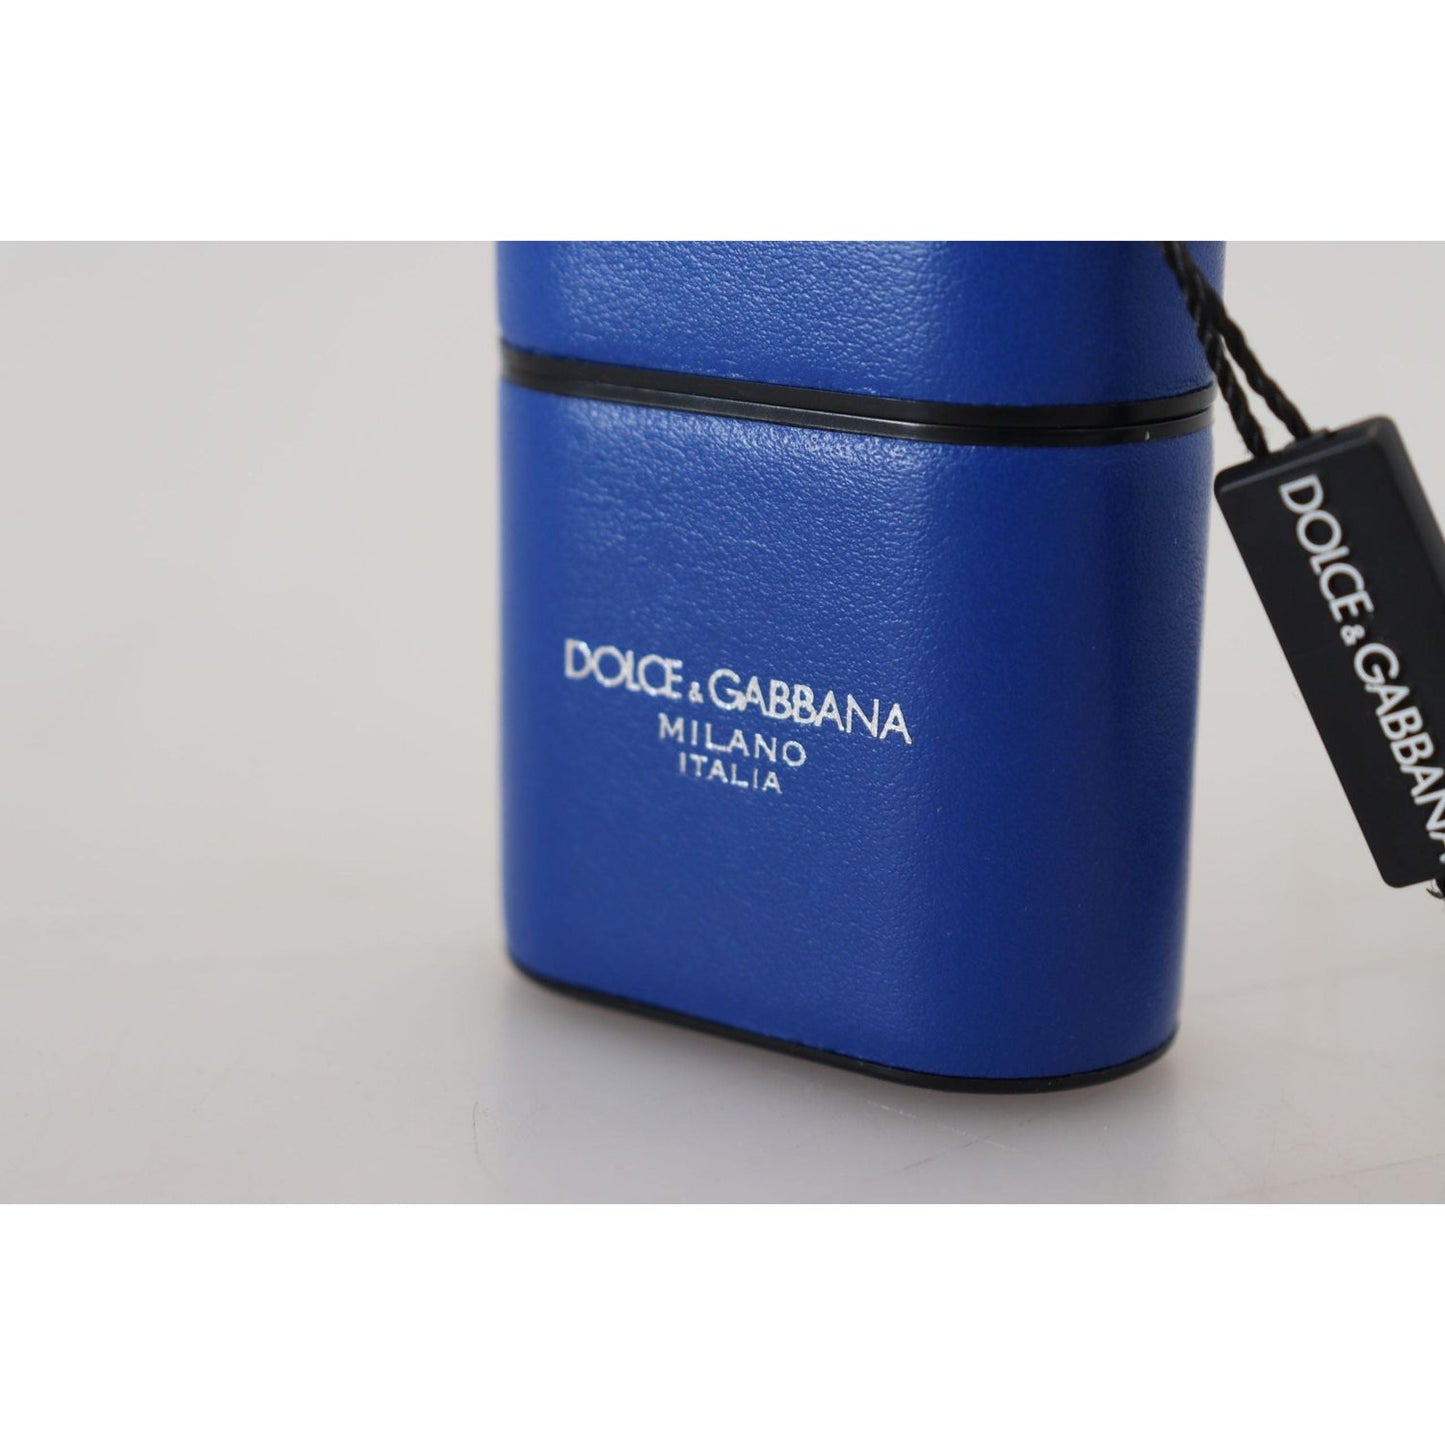 Dolce & Gabbana Elegant Blue Leather Airpods Case blue-leather-silver-metal-logo-airpods-case